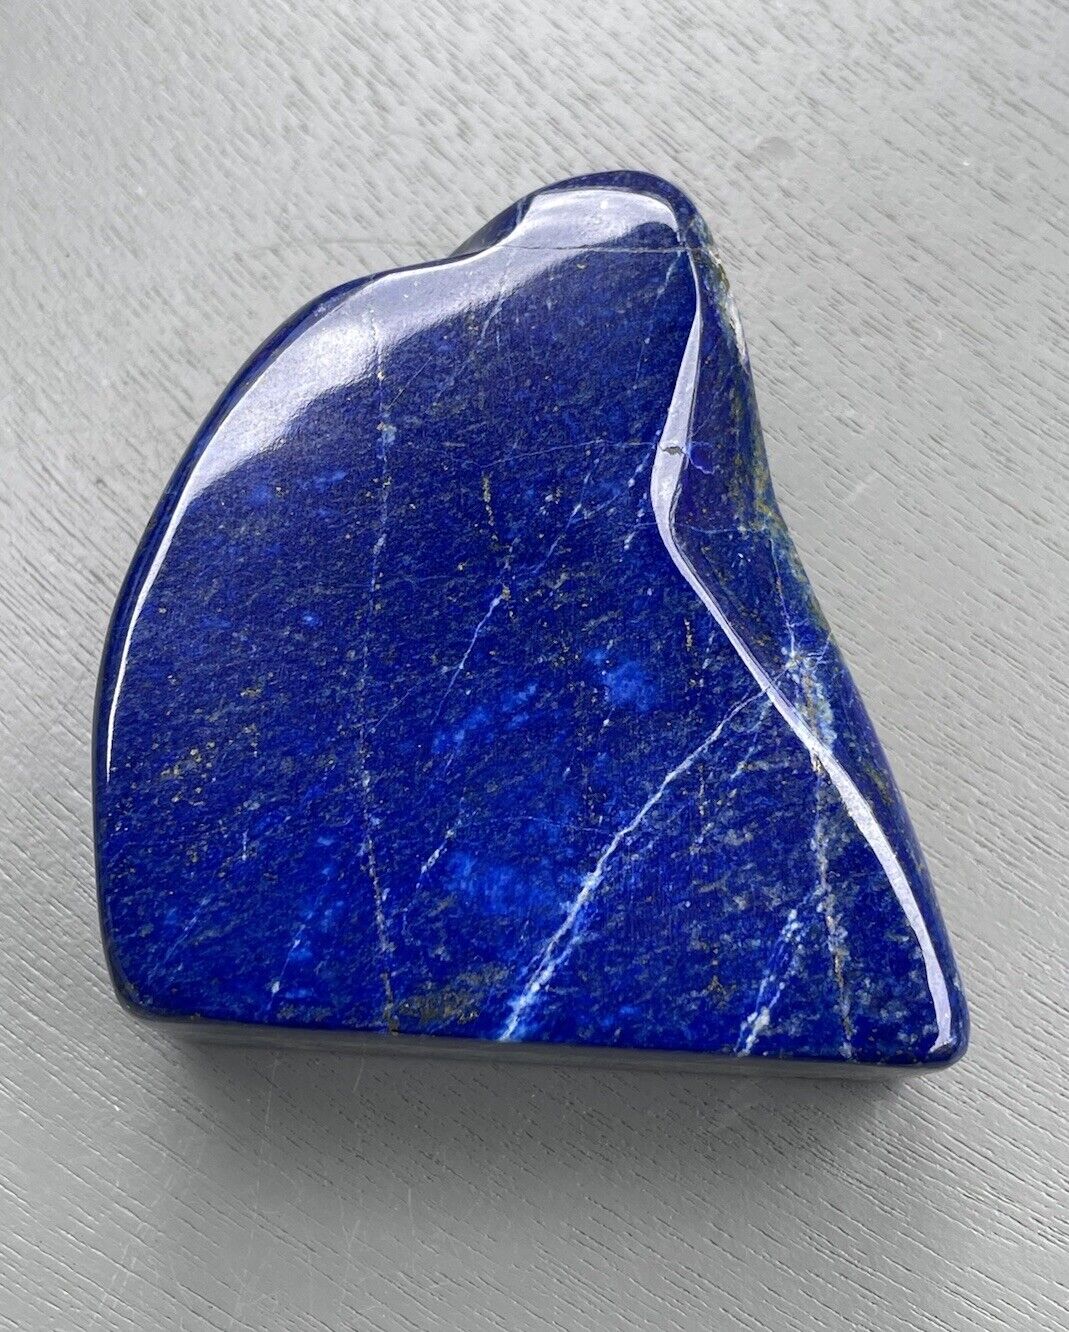 Polished Freeform Lapis Lazuli, Pakistan 206g